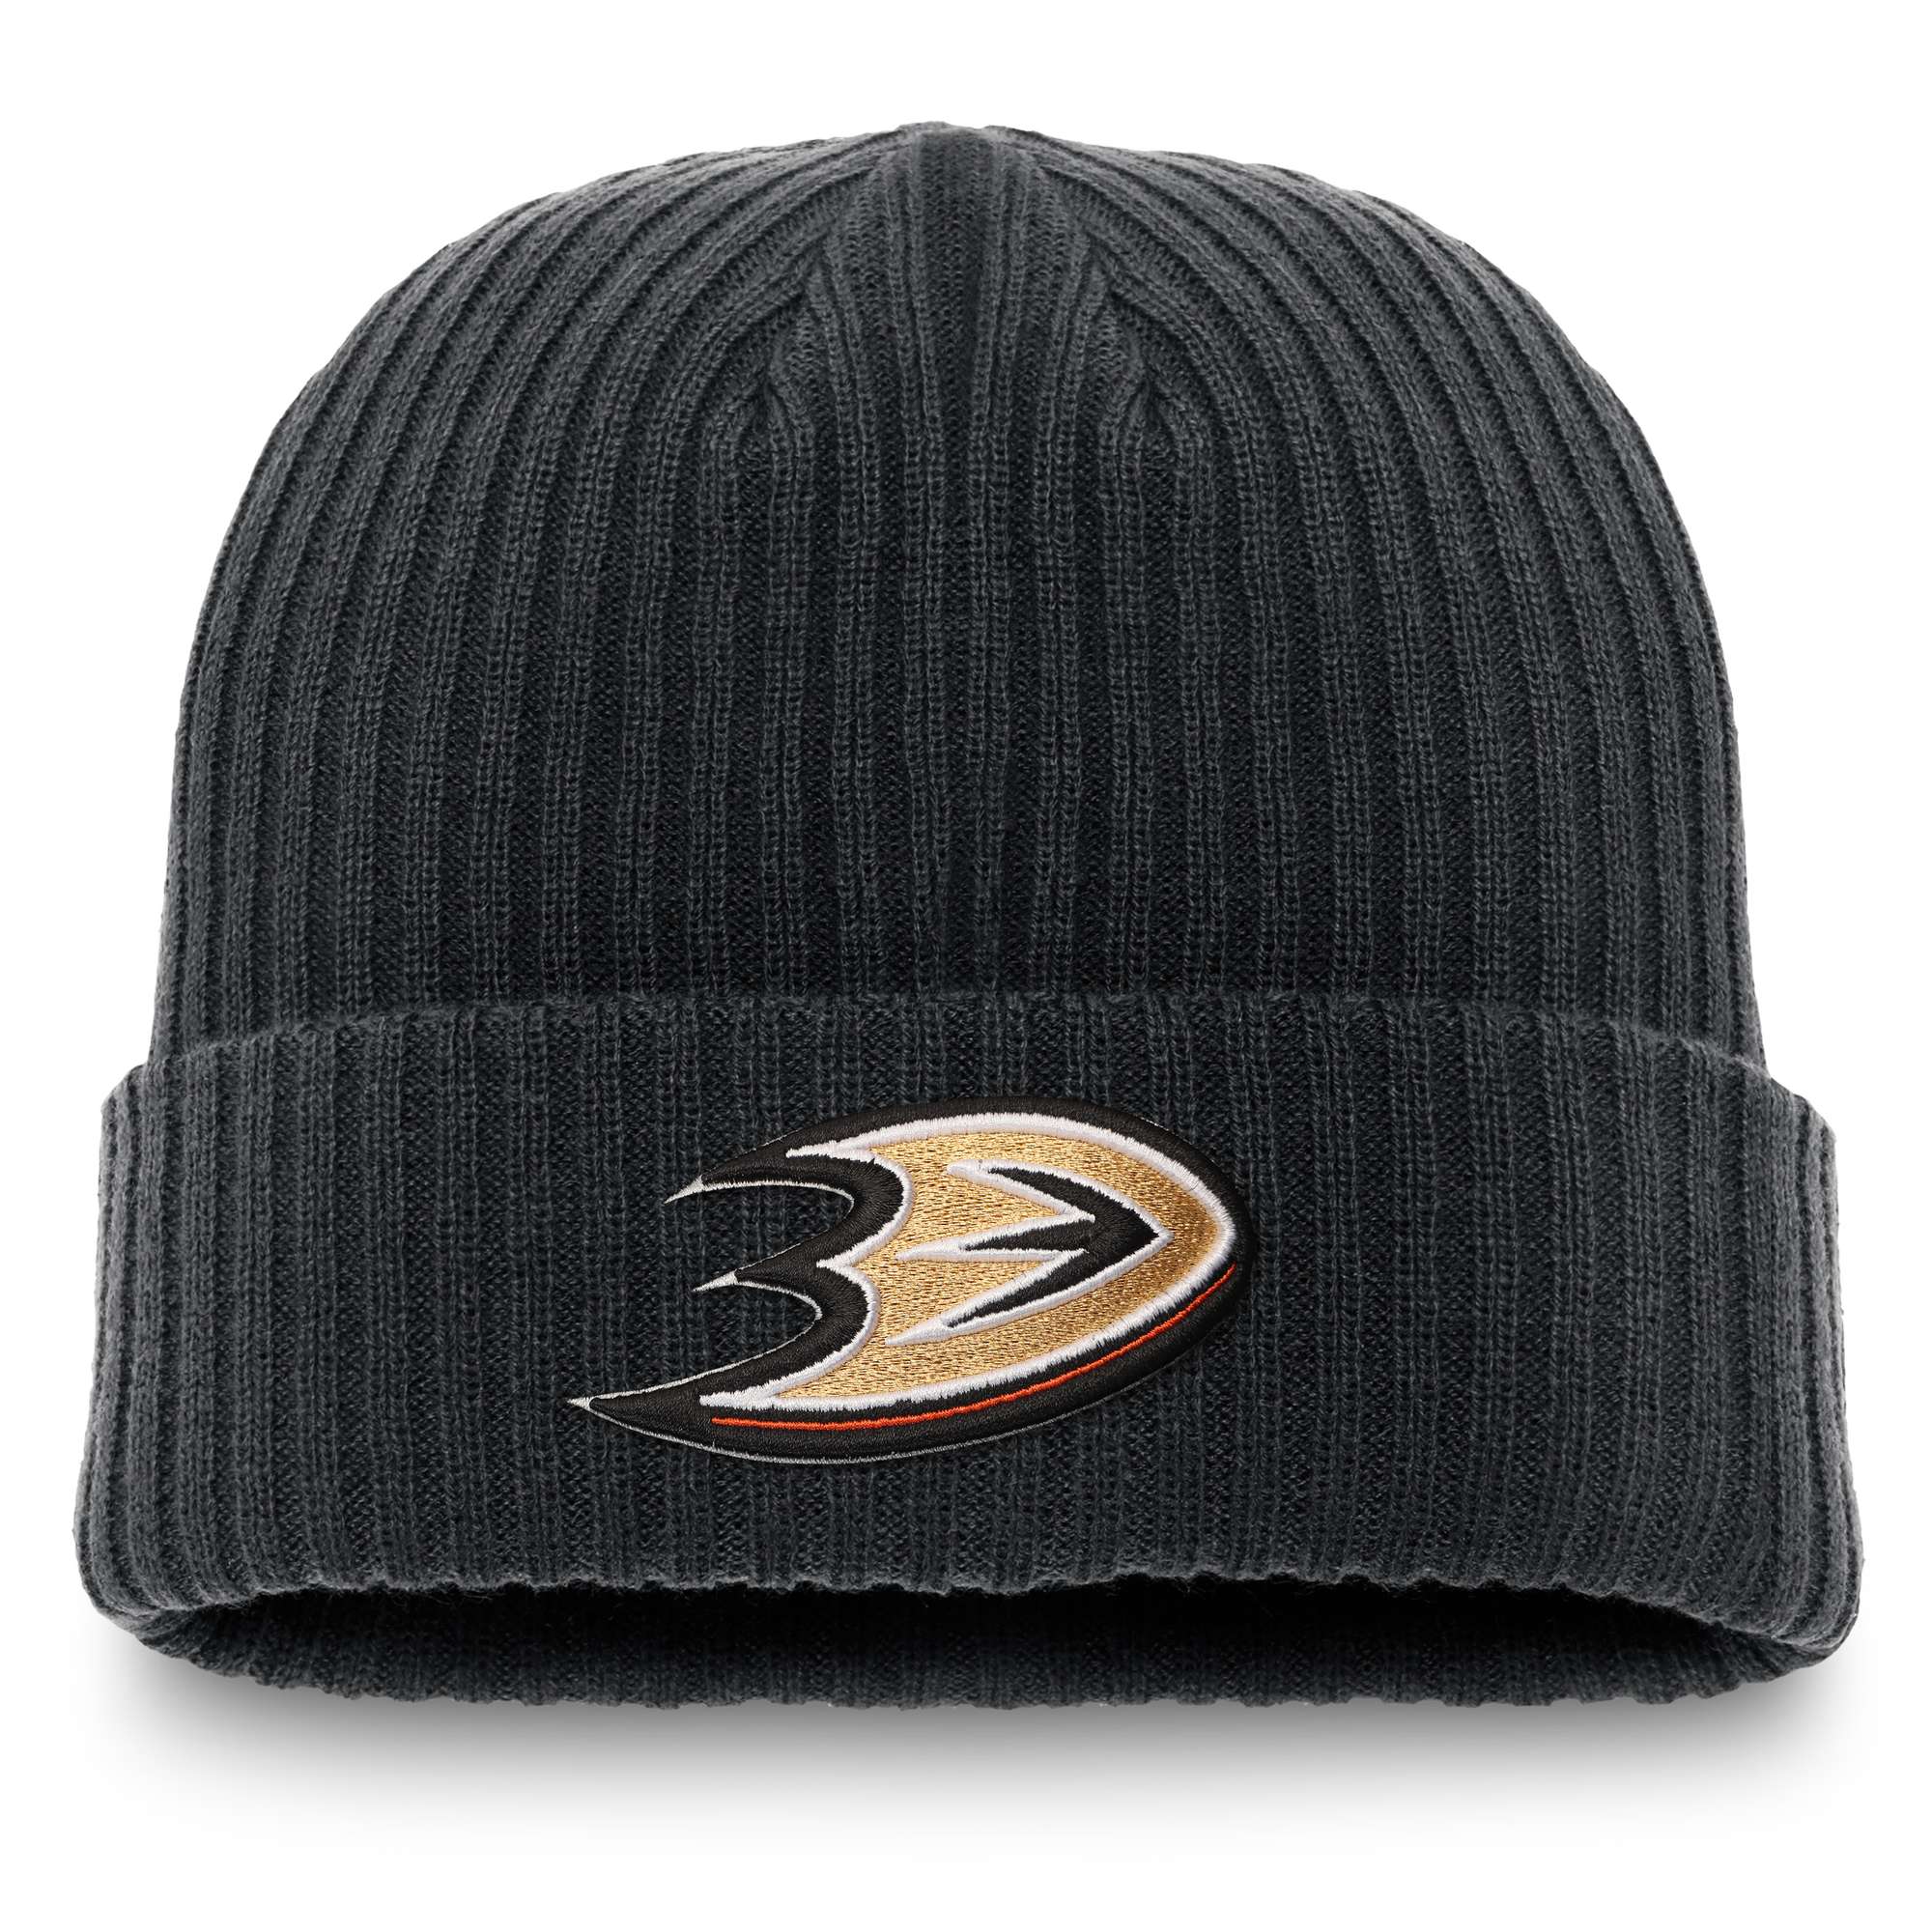 Fanatics - NHL Anaheim Ducks Core Cuffed Knit Beanie - Schwarz